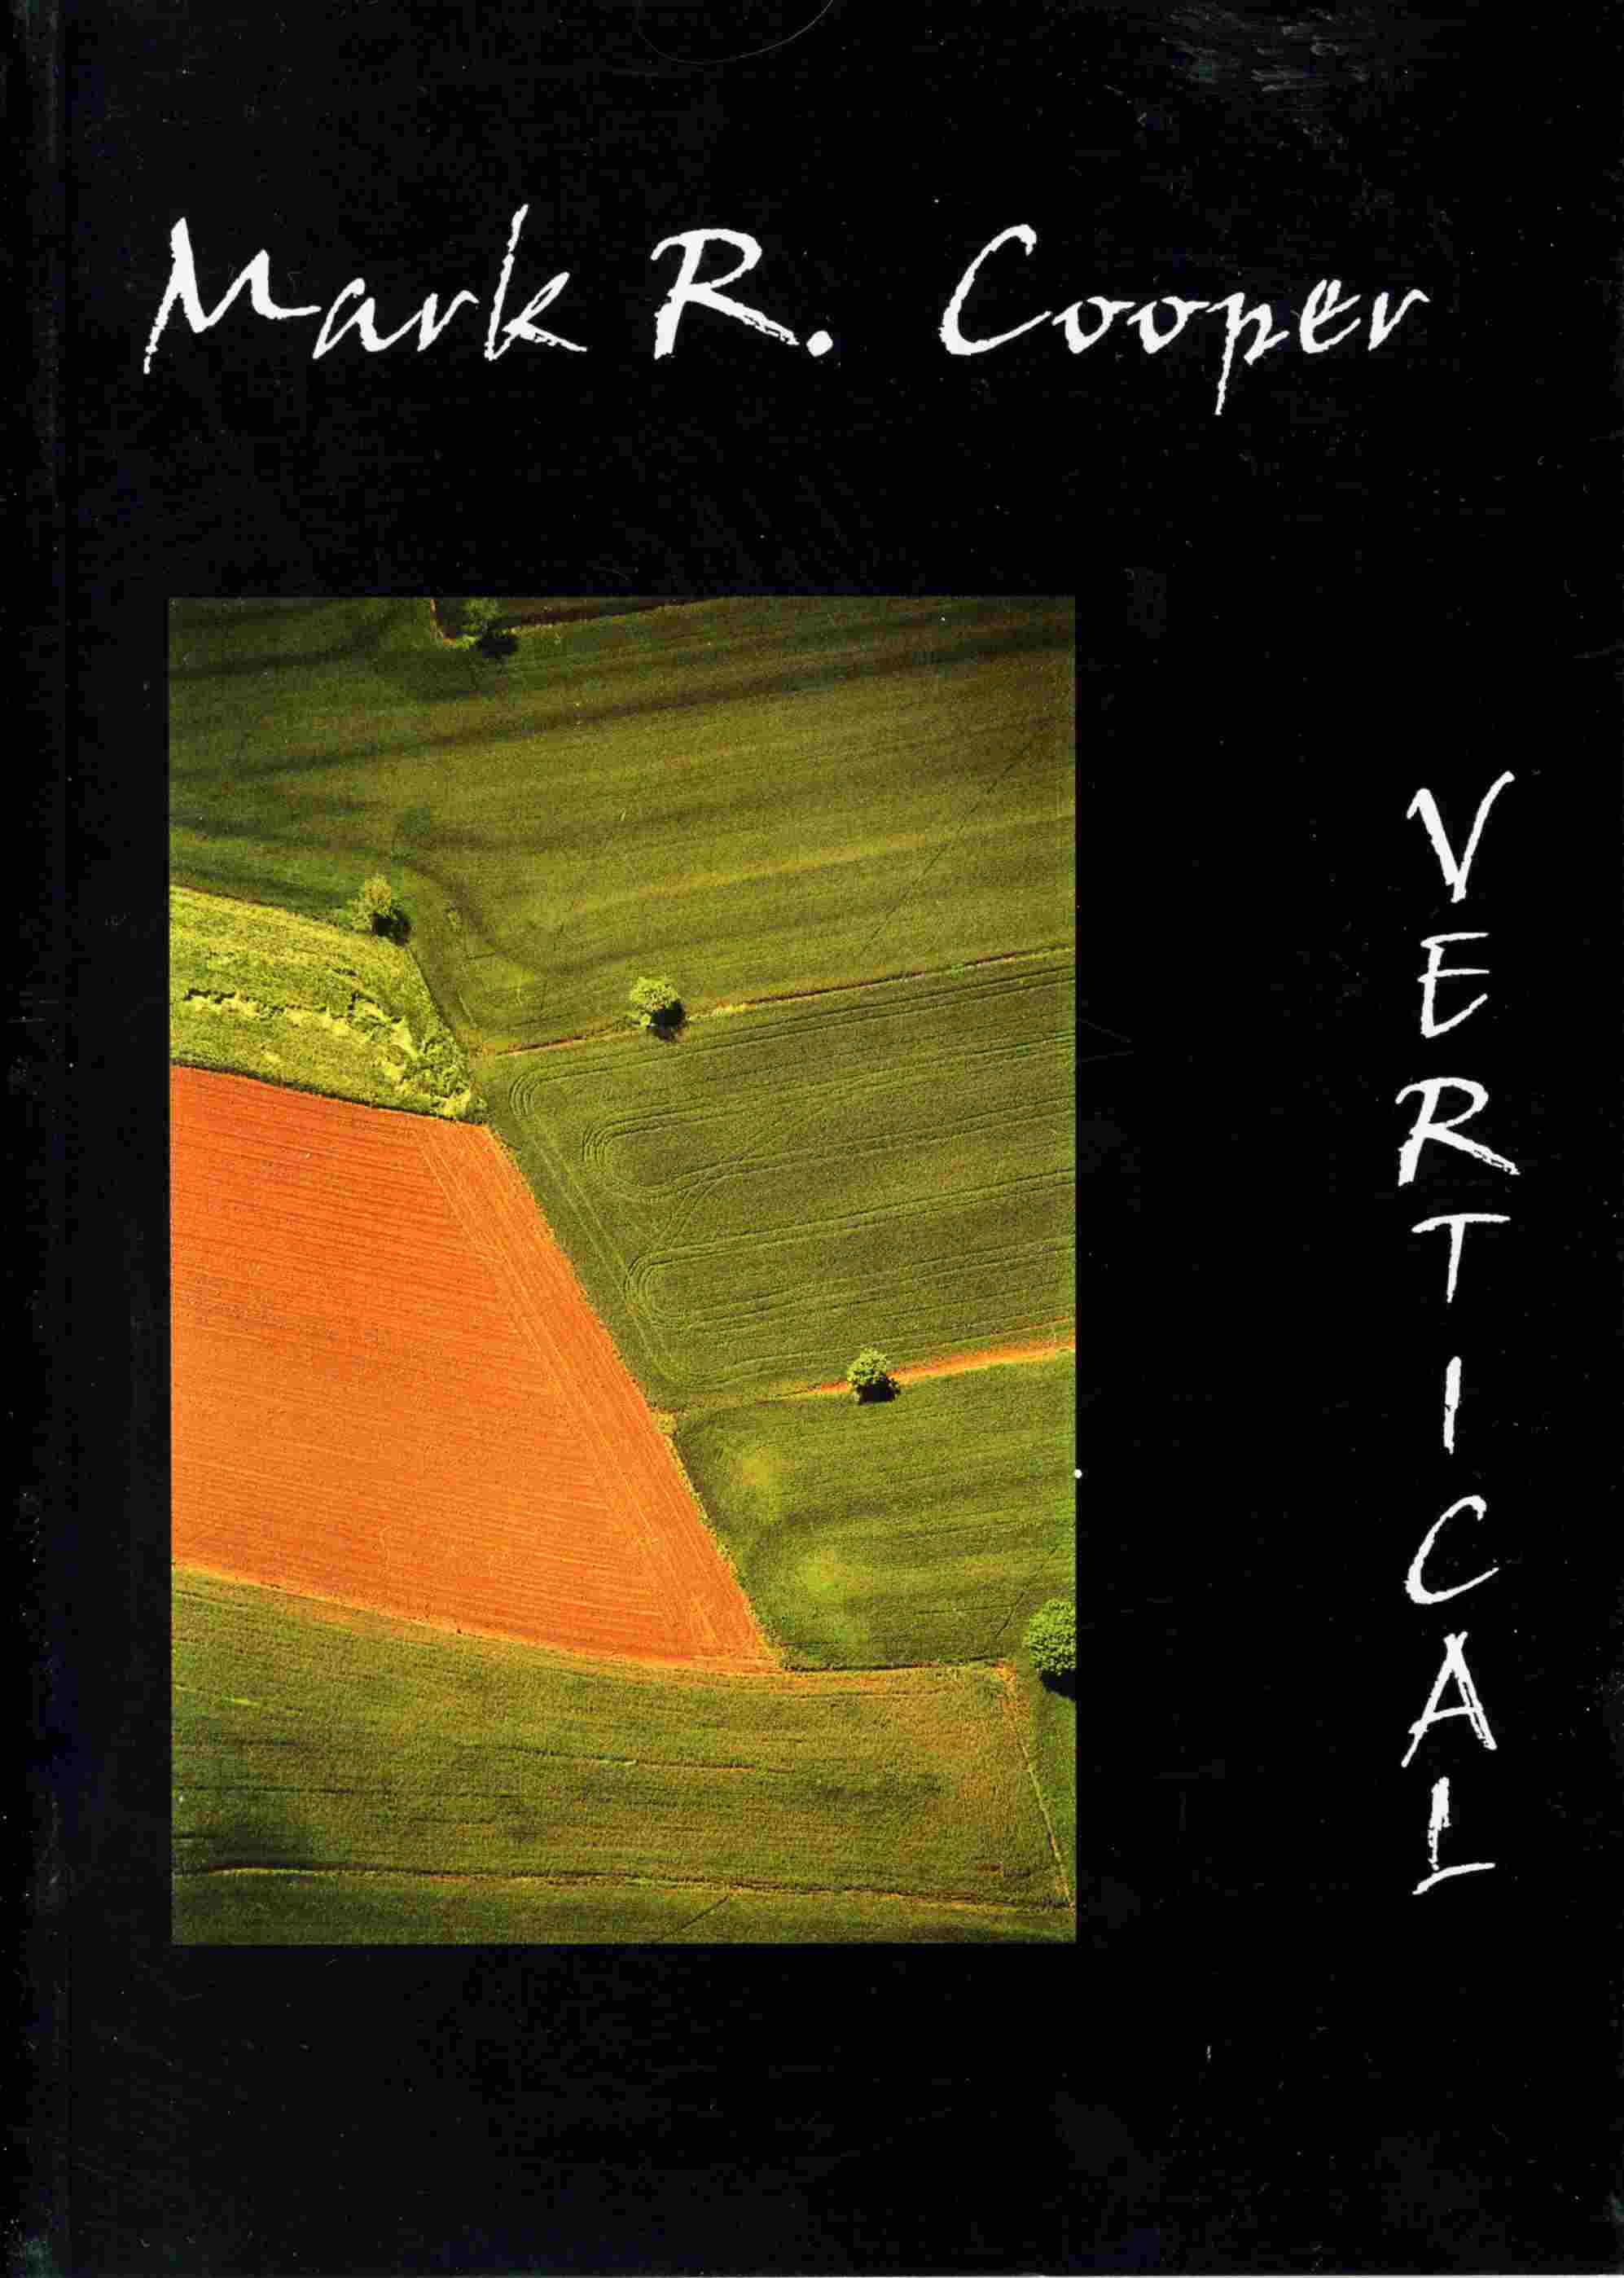 Copertina del Libro di Mark Cooper "Vertical"